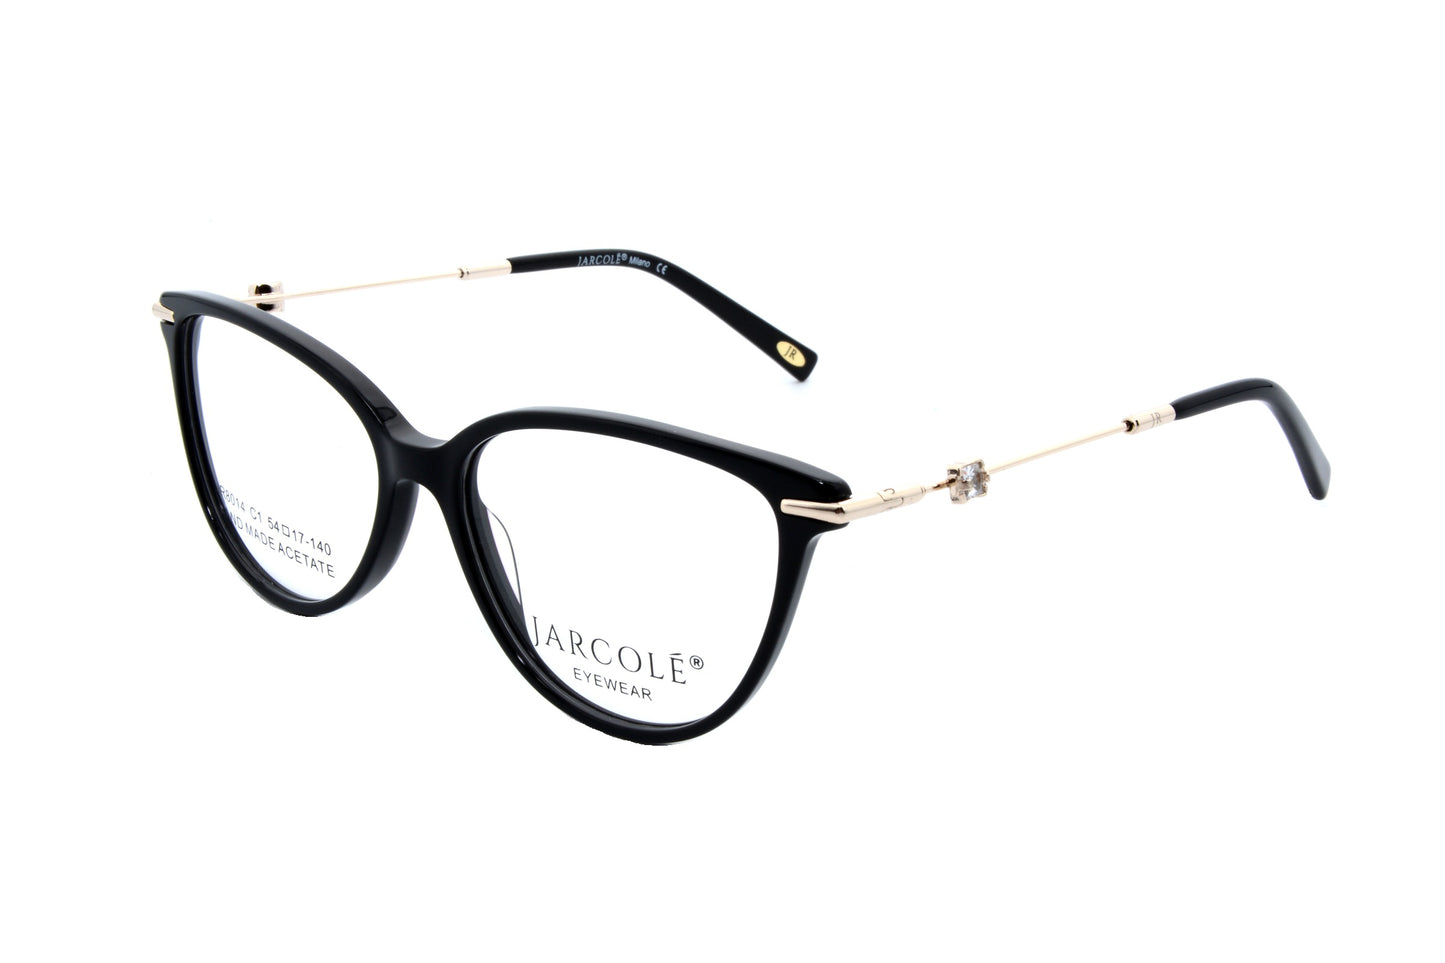 Jarcole eyewear 8014, C1 - Optics Trading